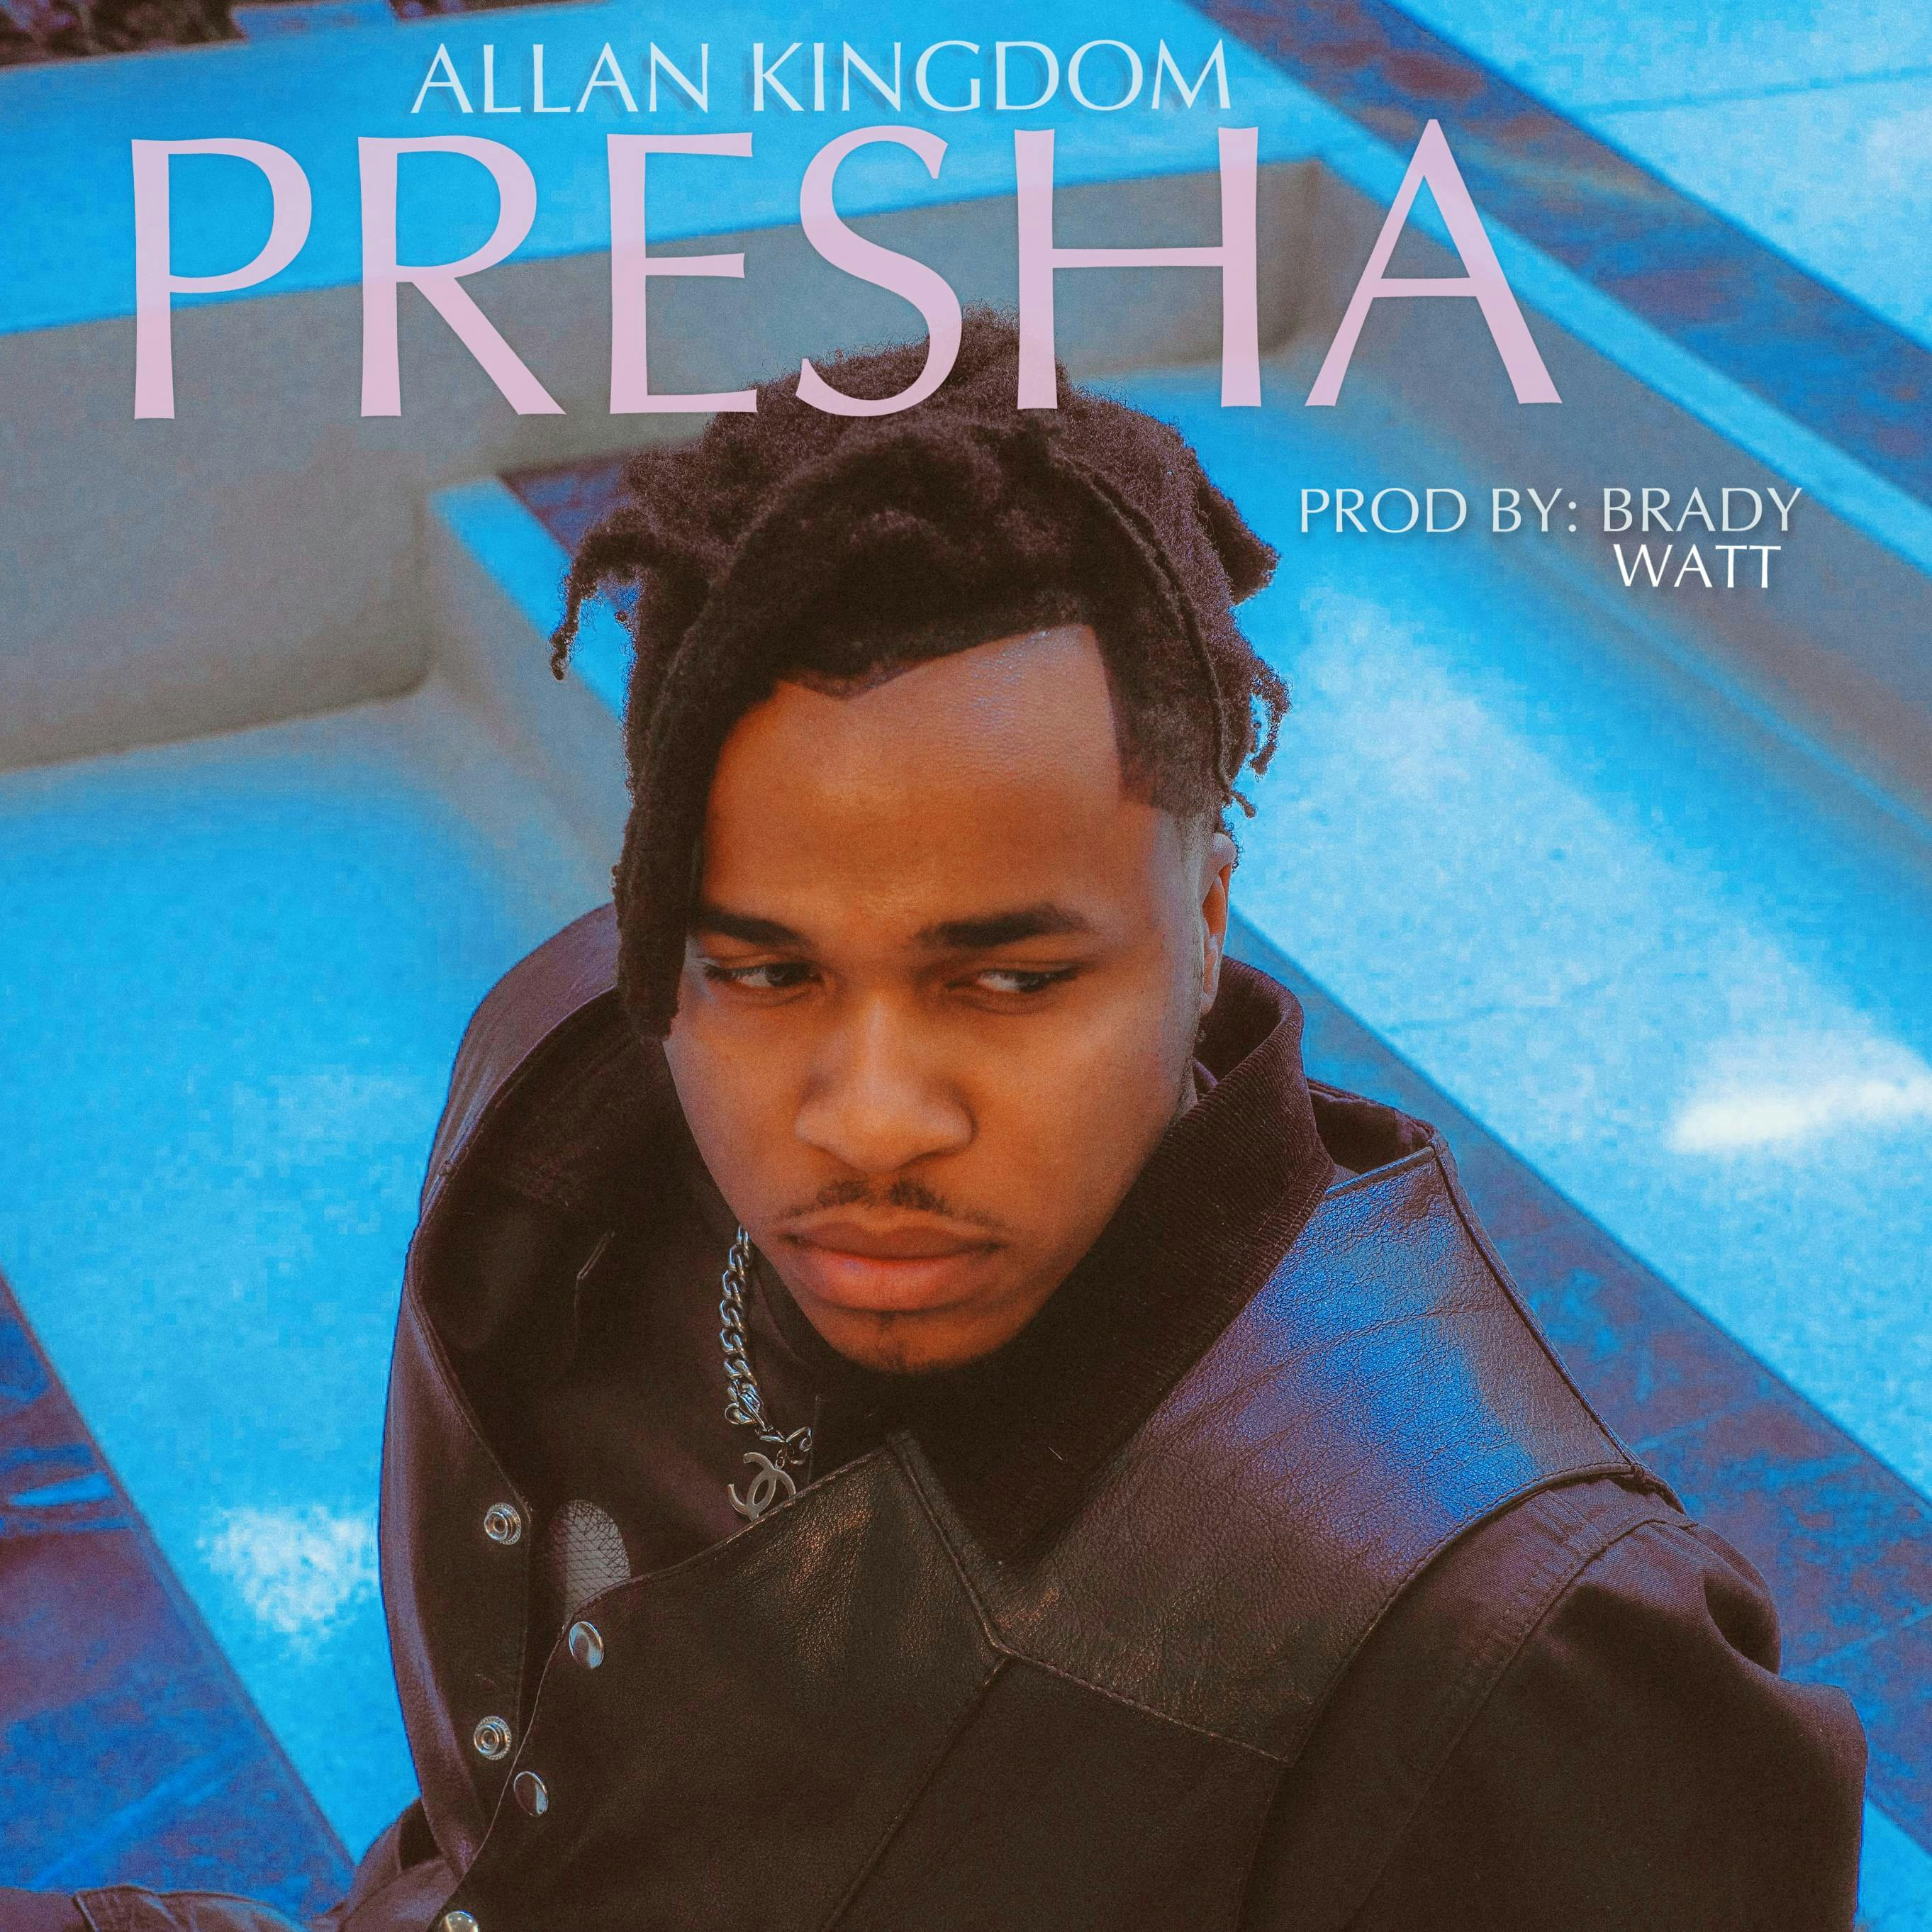 Cover art for Allan Kingdom's song: Presha